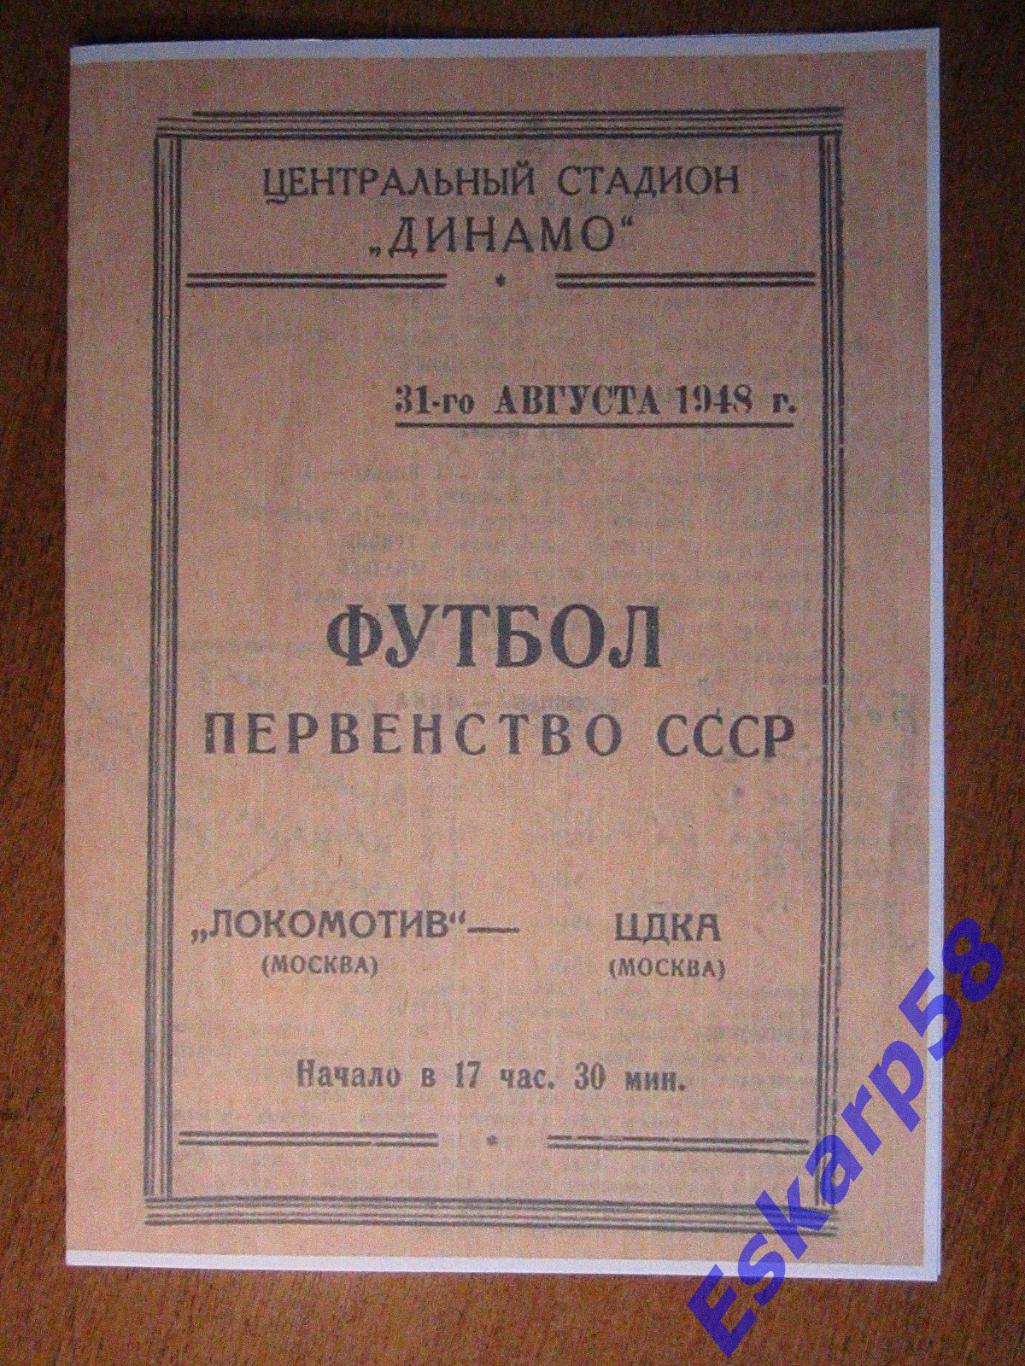 1948. Локомотив - ЦДКА.31.08. Копия